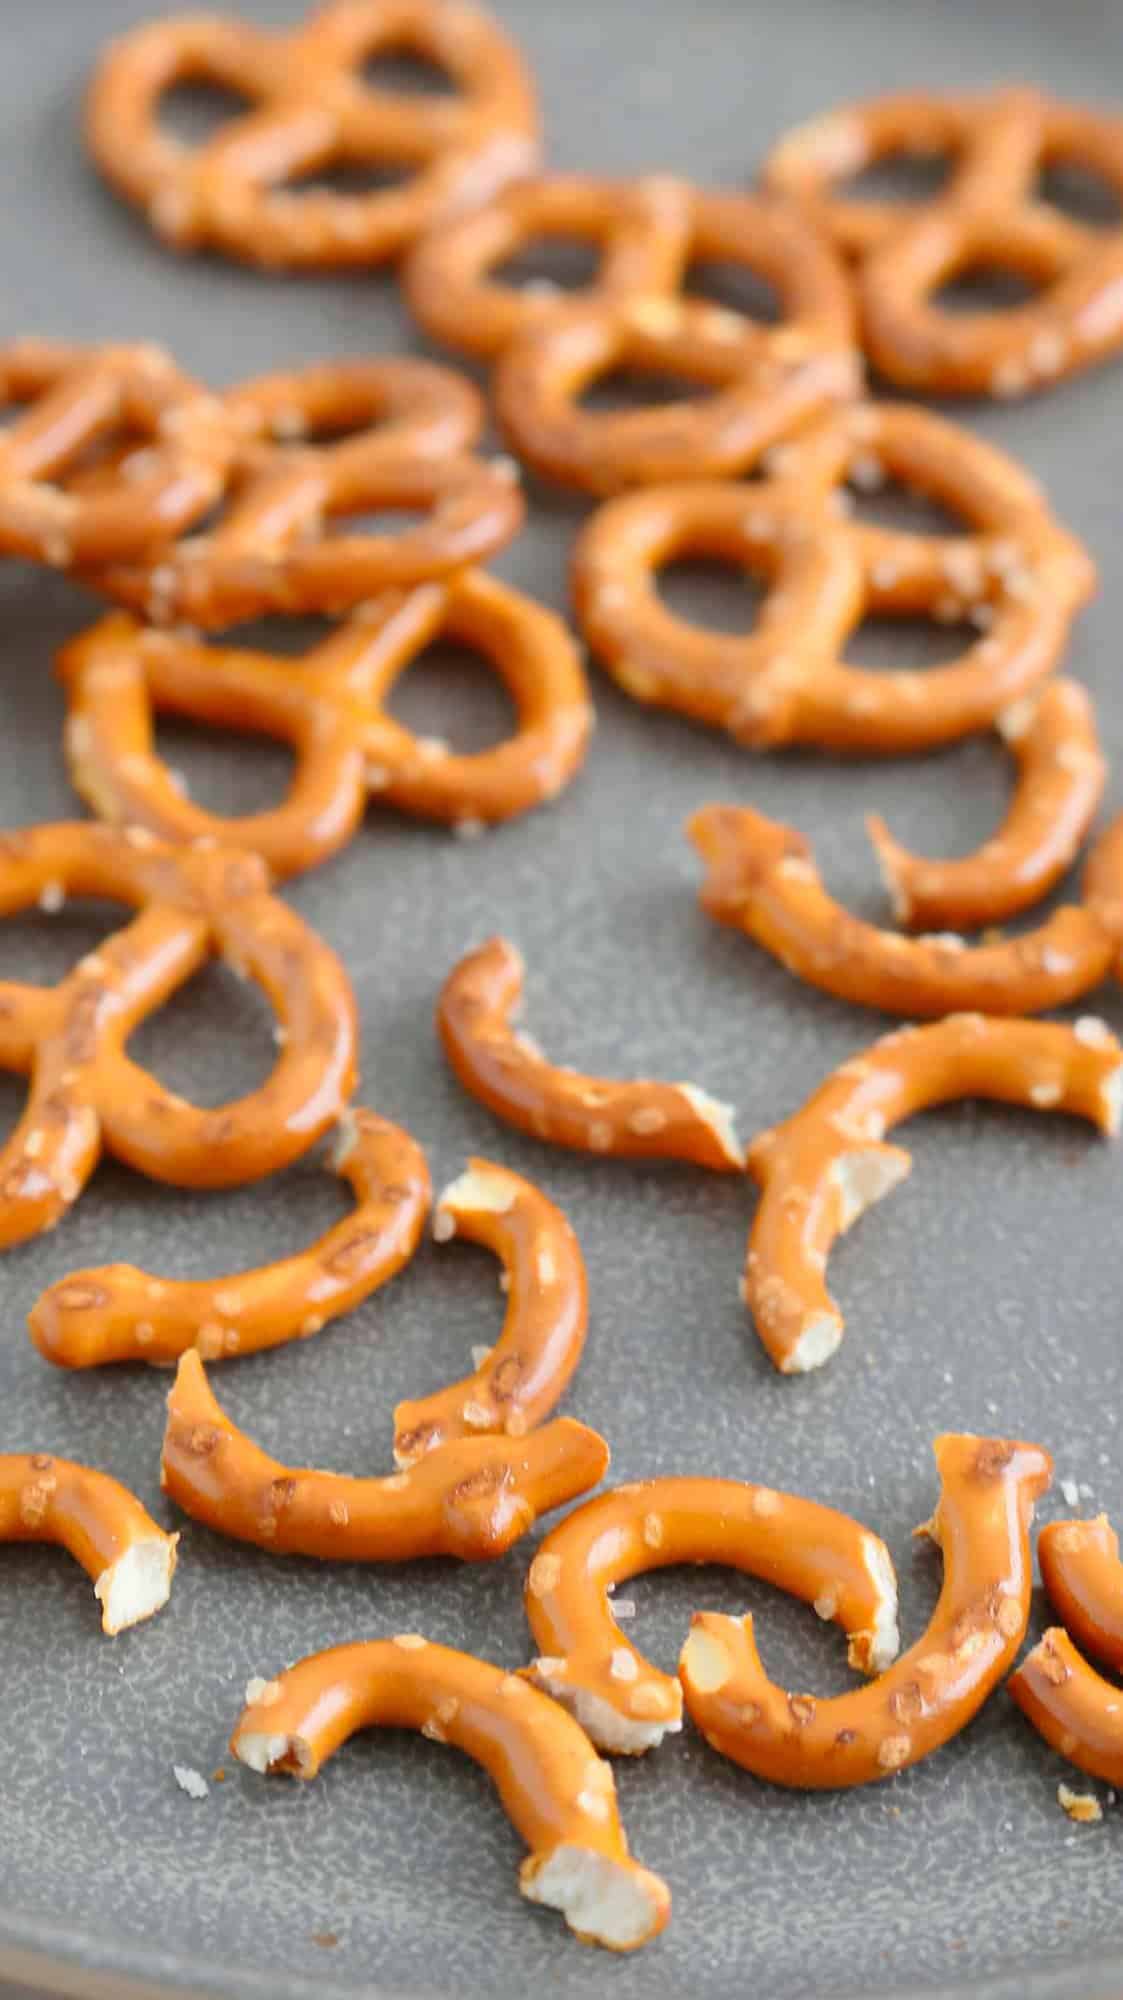 broken pretzels in a grey plate.